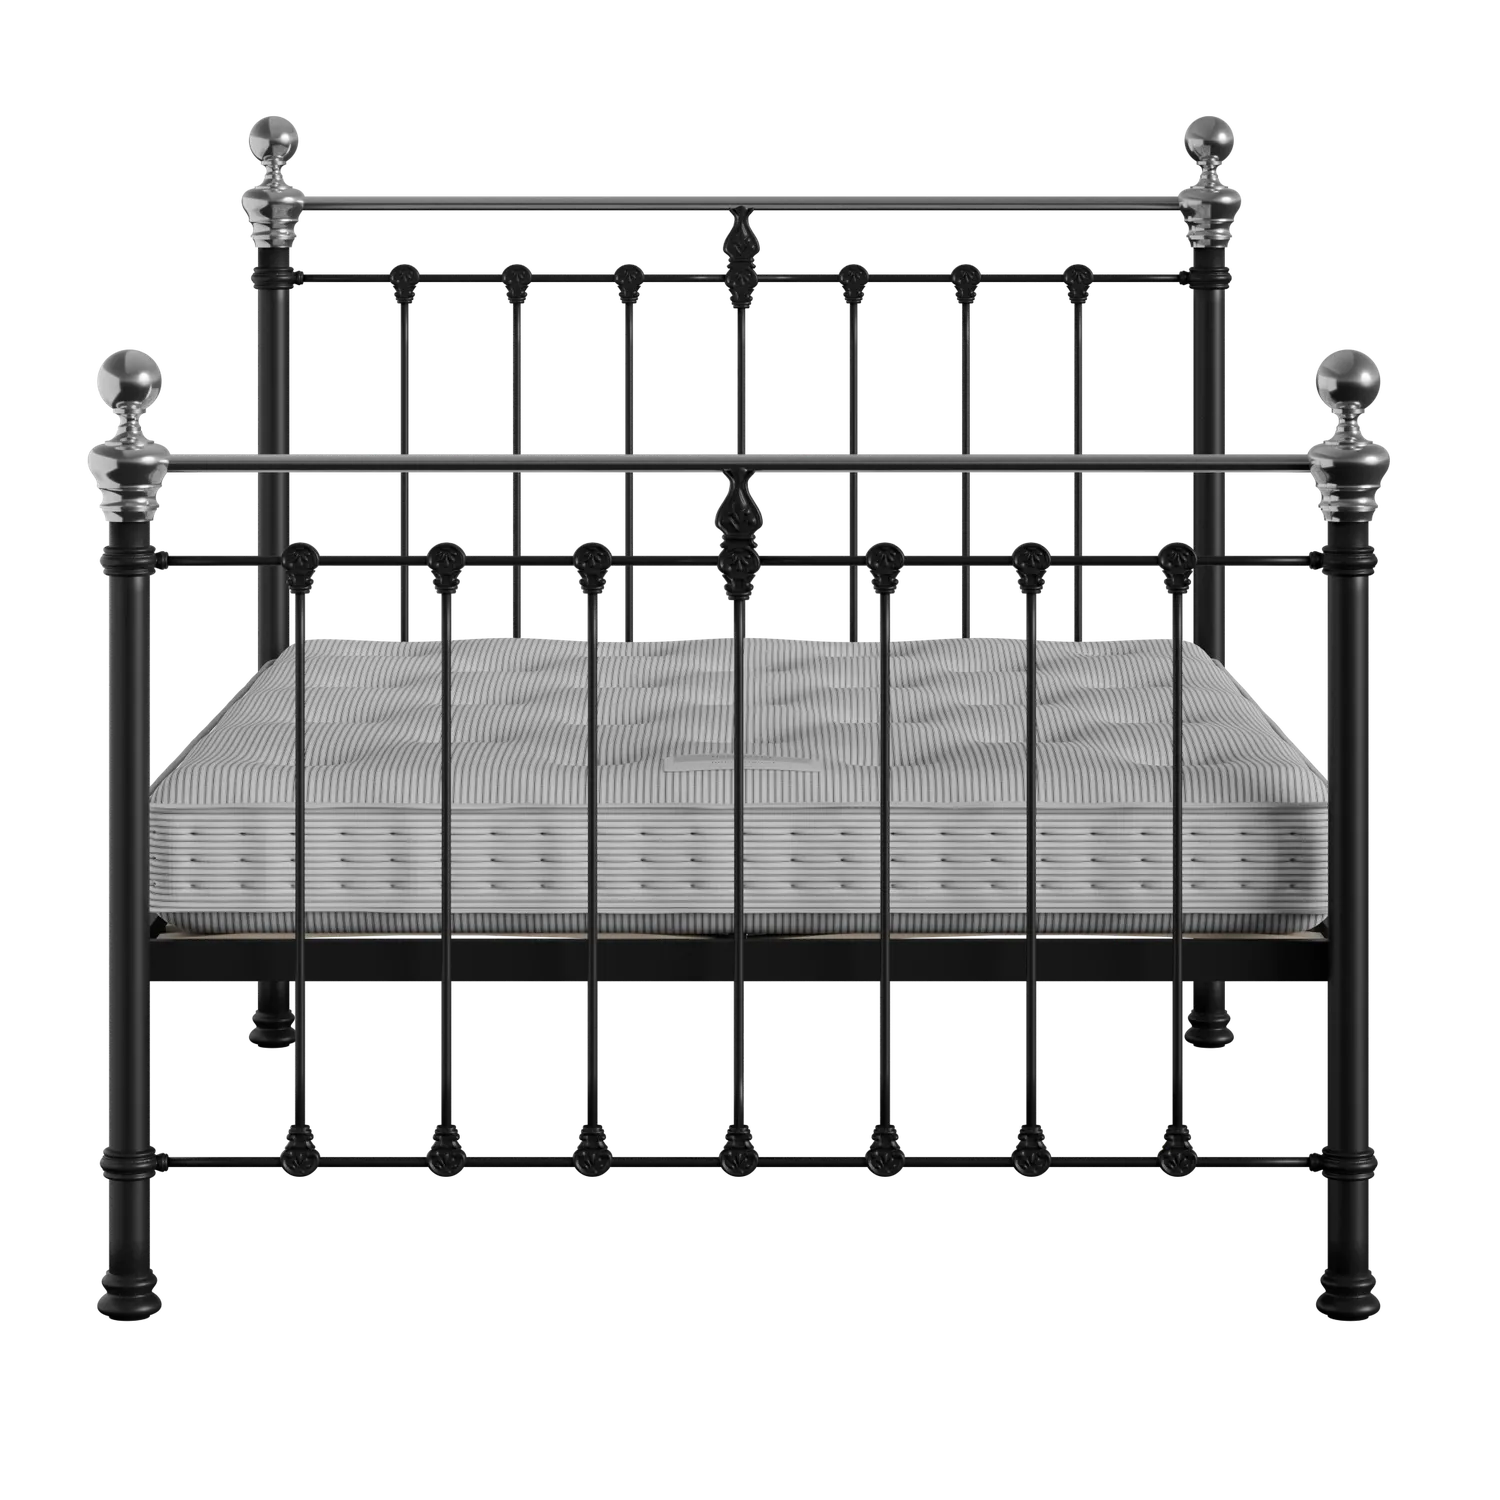 Hamilton Chromo iron/metal bed in black with Juno mattress